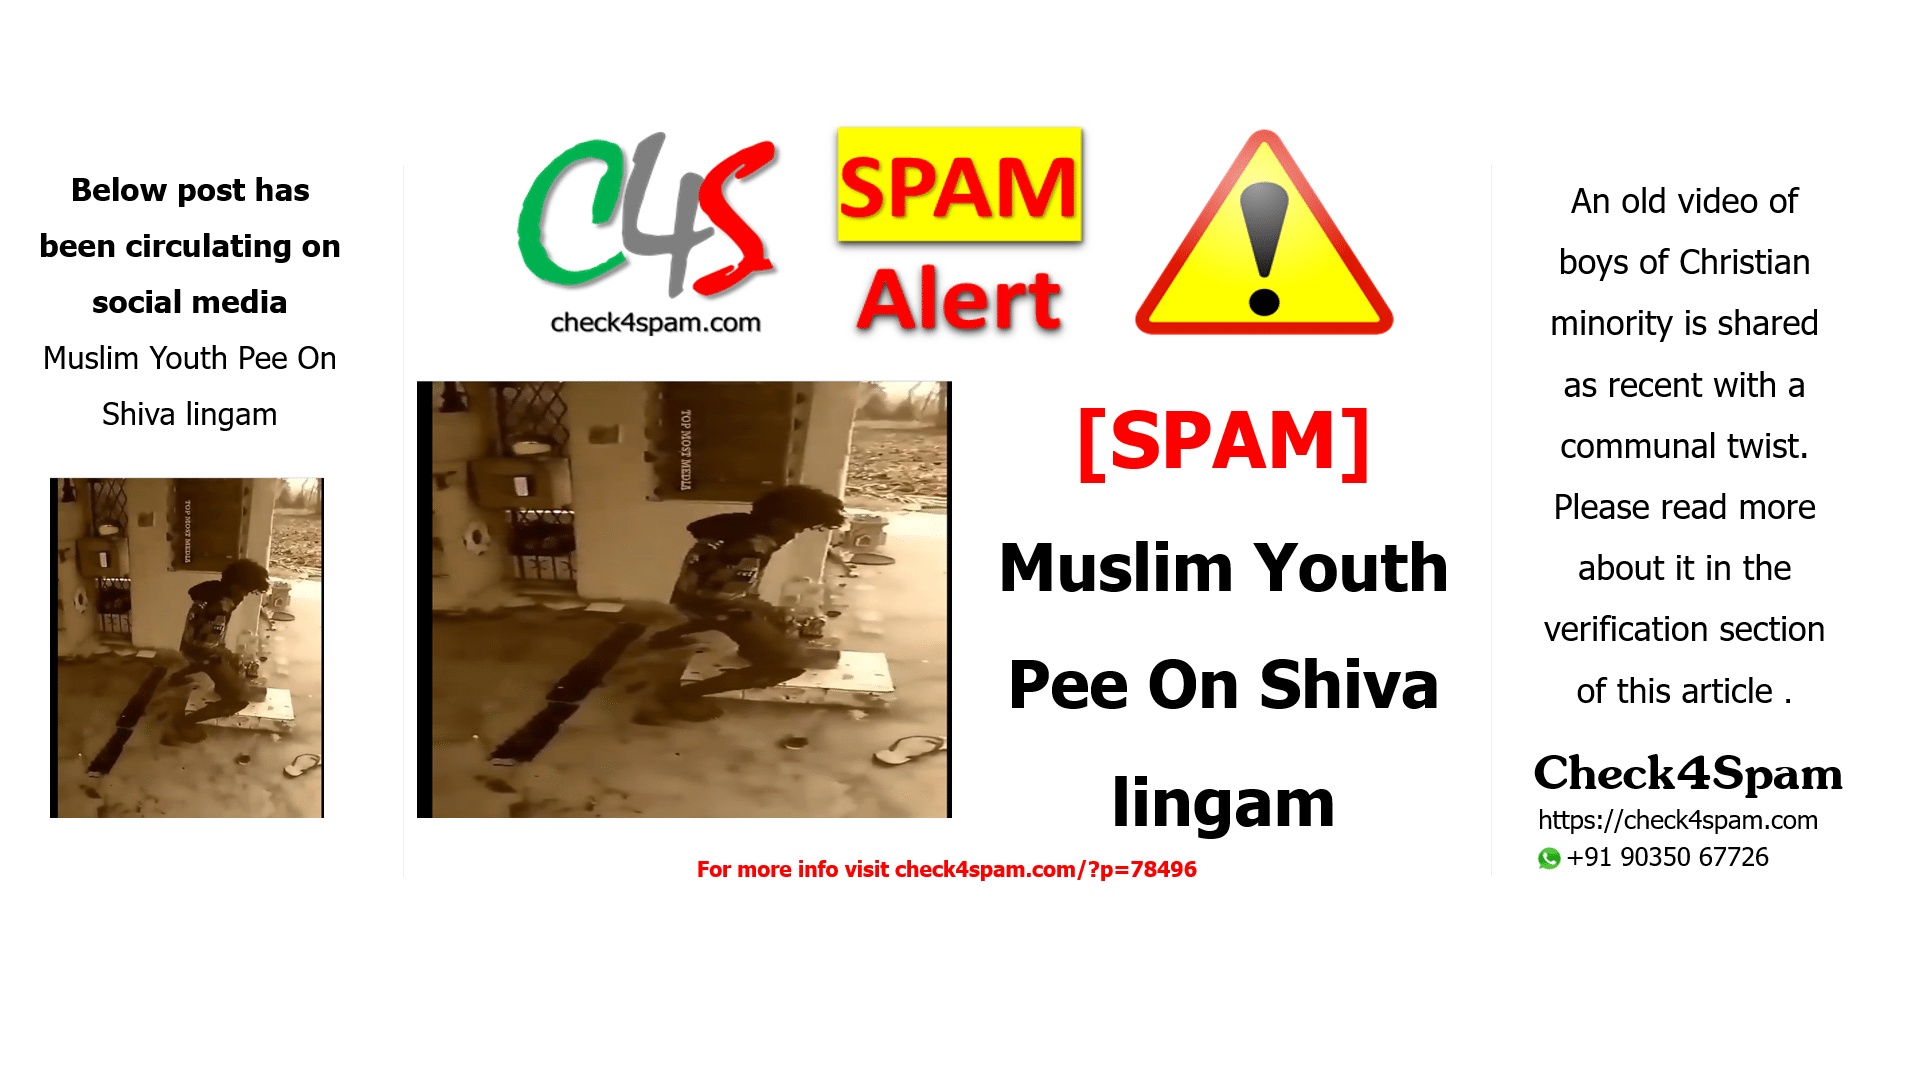 Muslim Youth Pee On Shivalingam